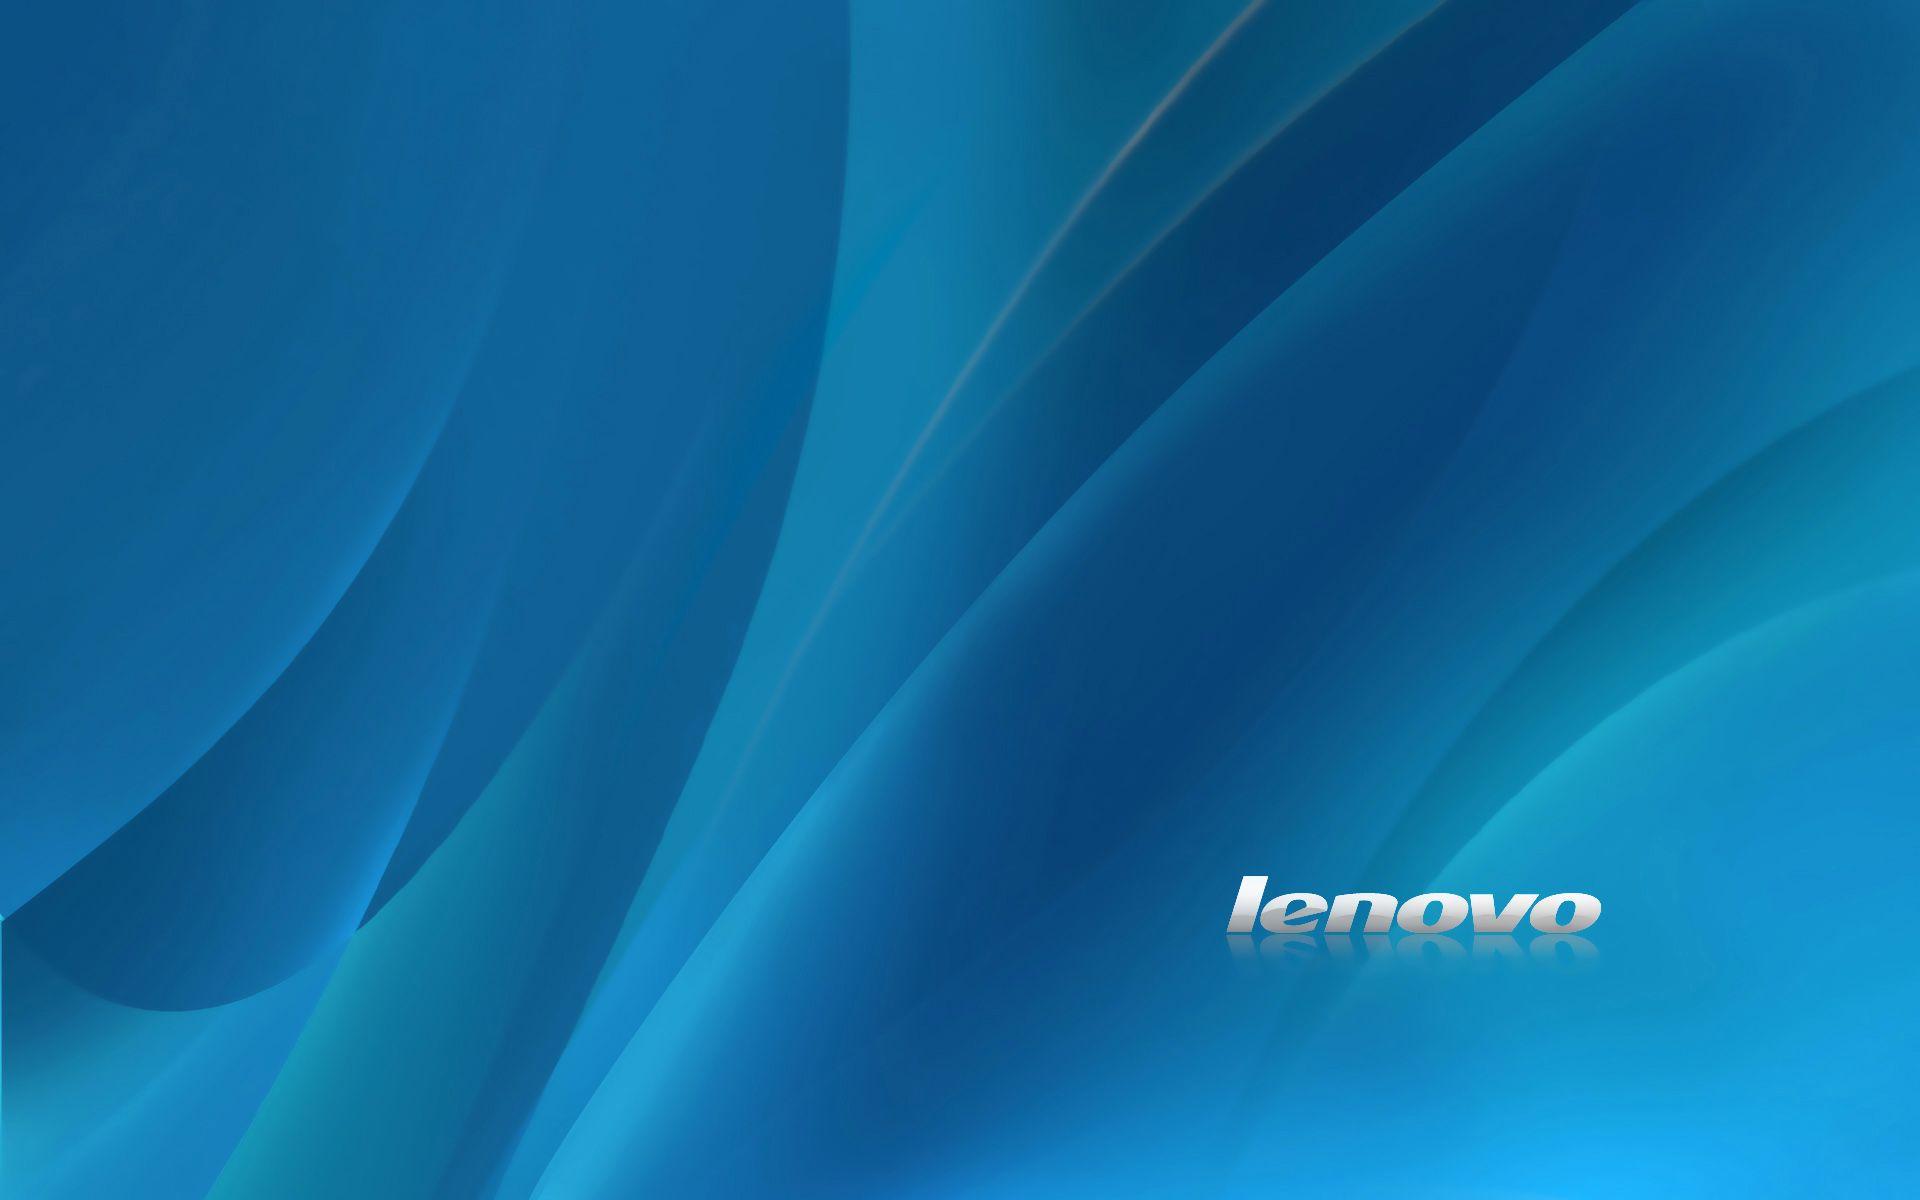 Lenovo HD Wallpapers - Wallpaper Cave